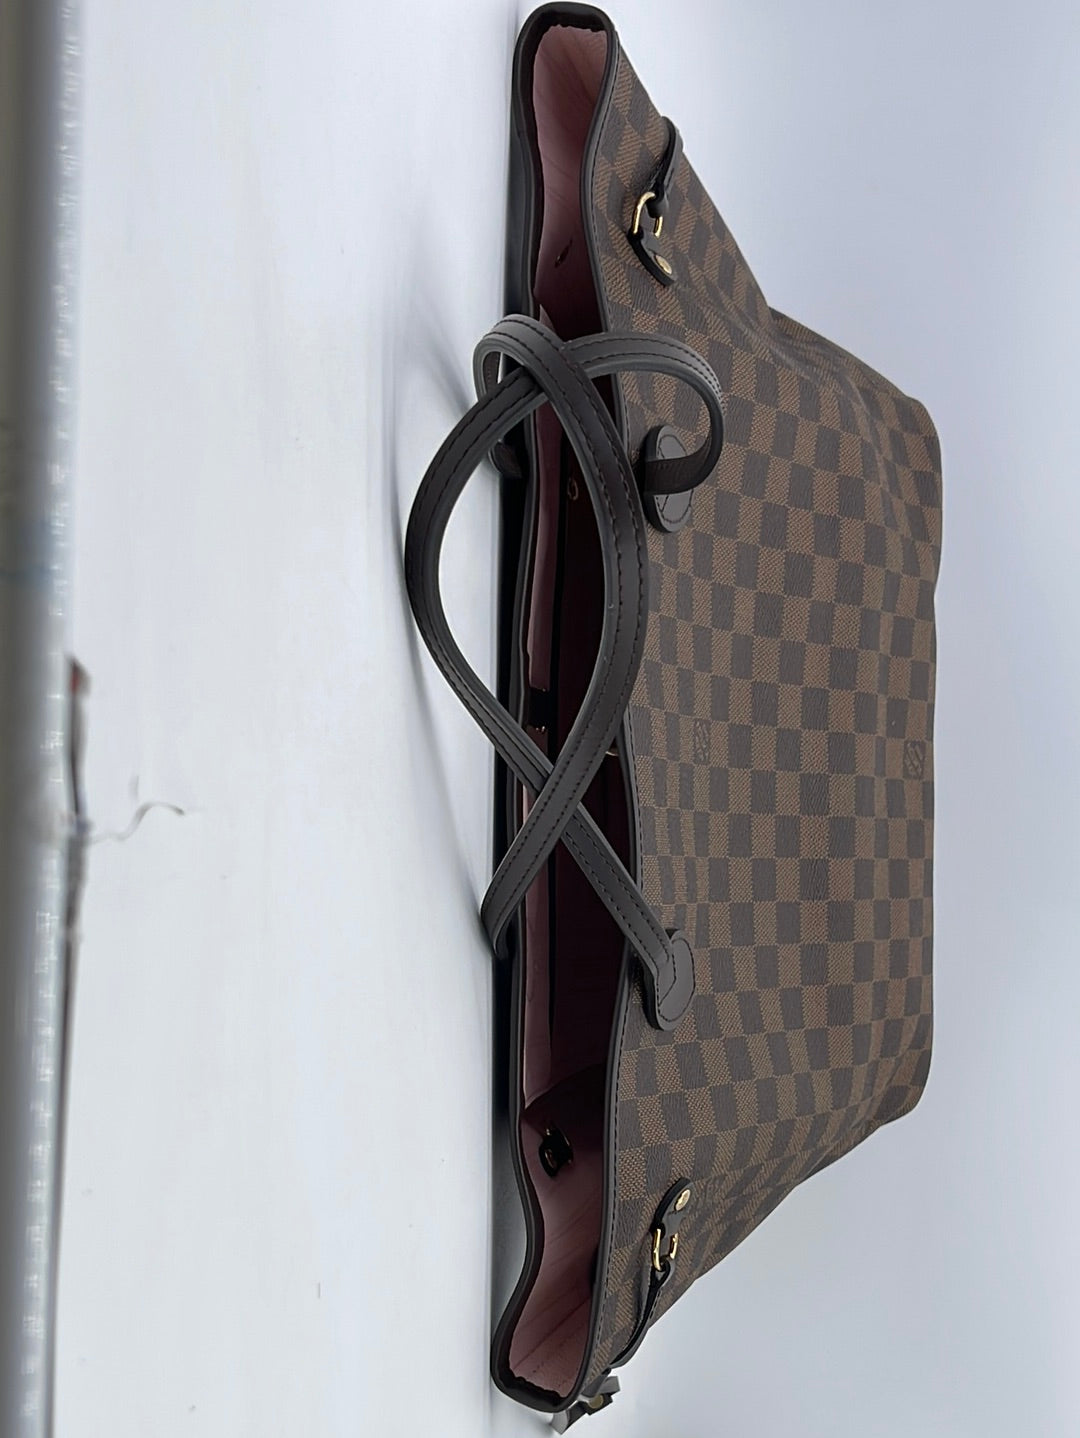 Preloved Louis Vuitton Damier Ebene Neverfull MM Tote Bag CA0170 03012 –  KimmieBBags LLC